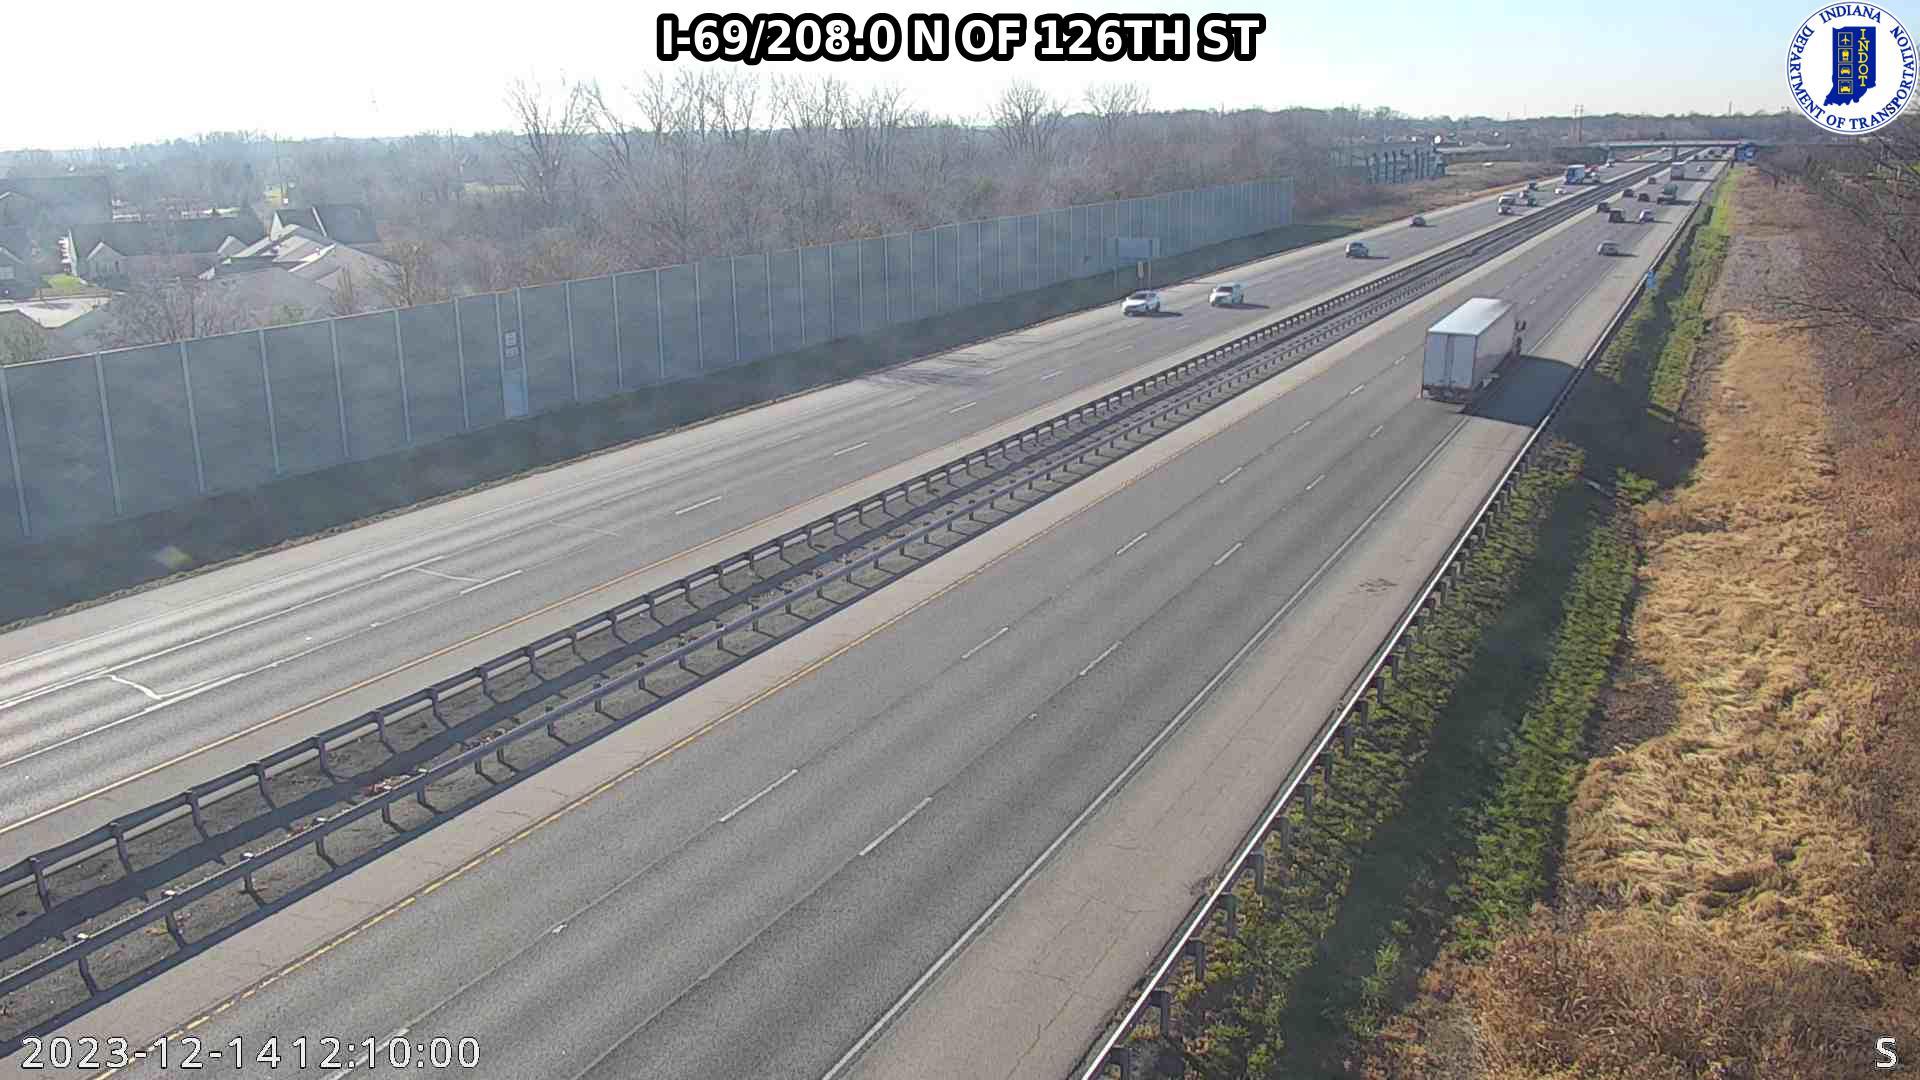 Traffic Cam Olio: I-69: I-69/208.0 N OF 126TH ST Player